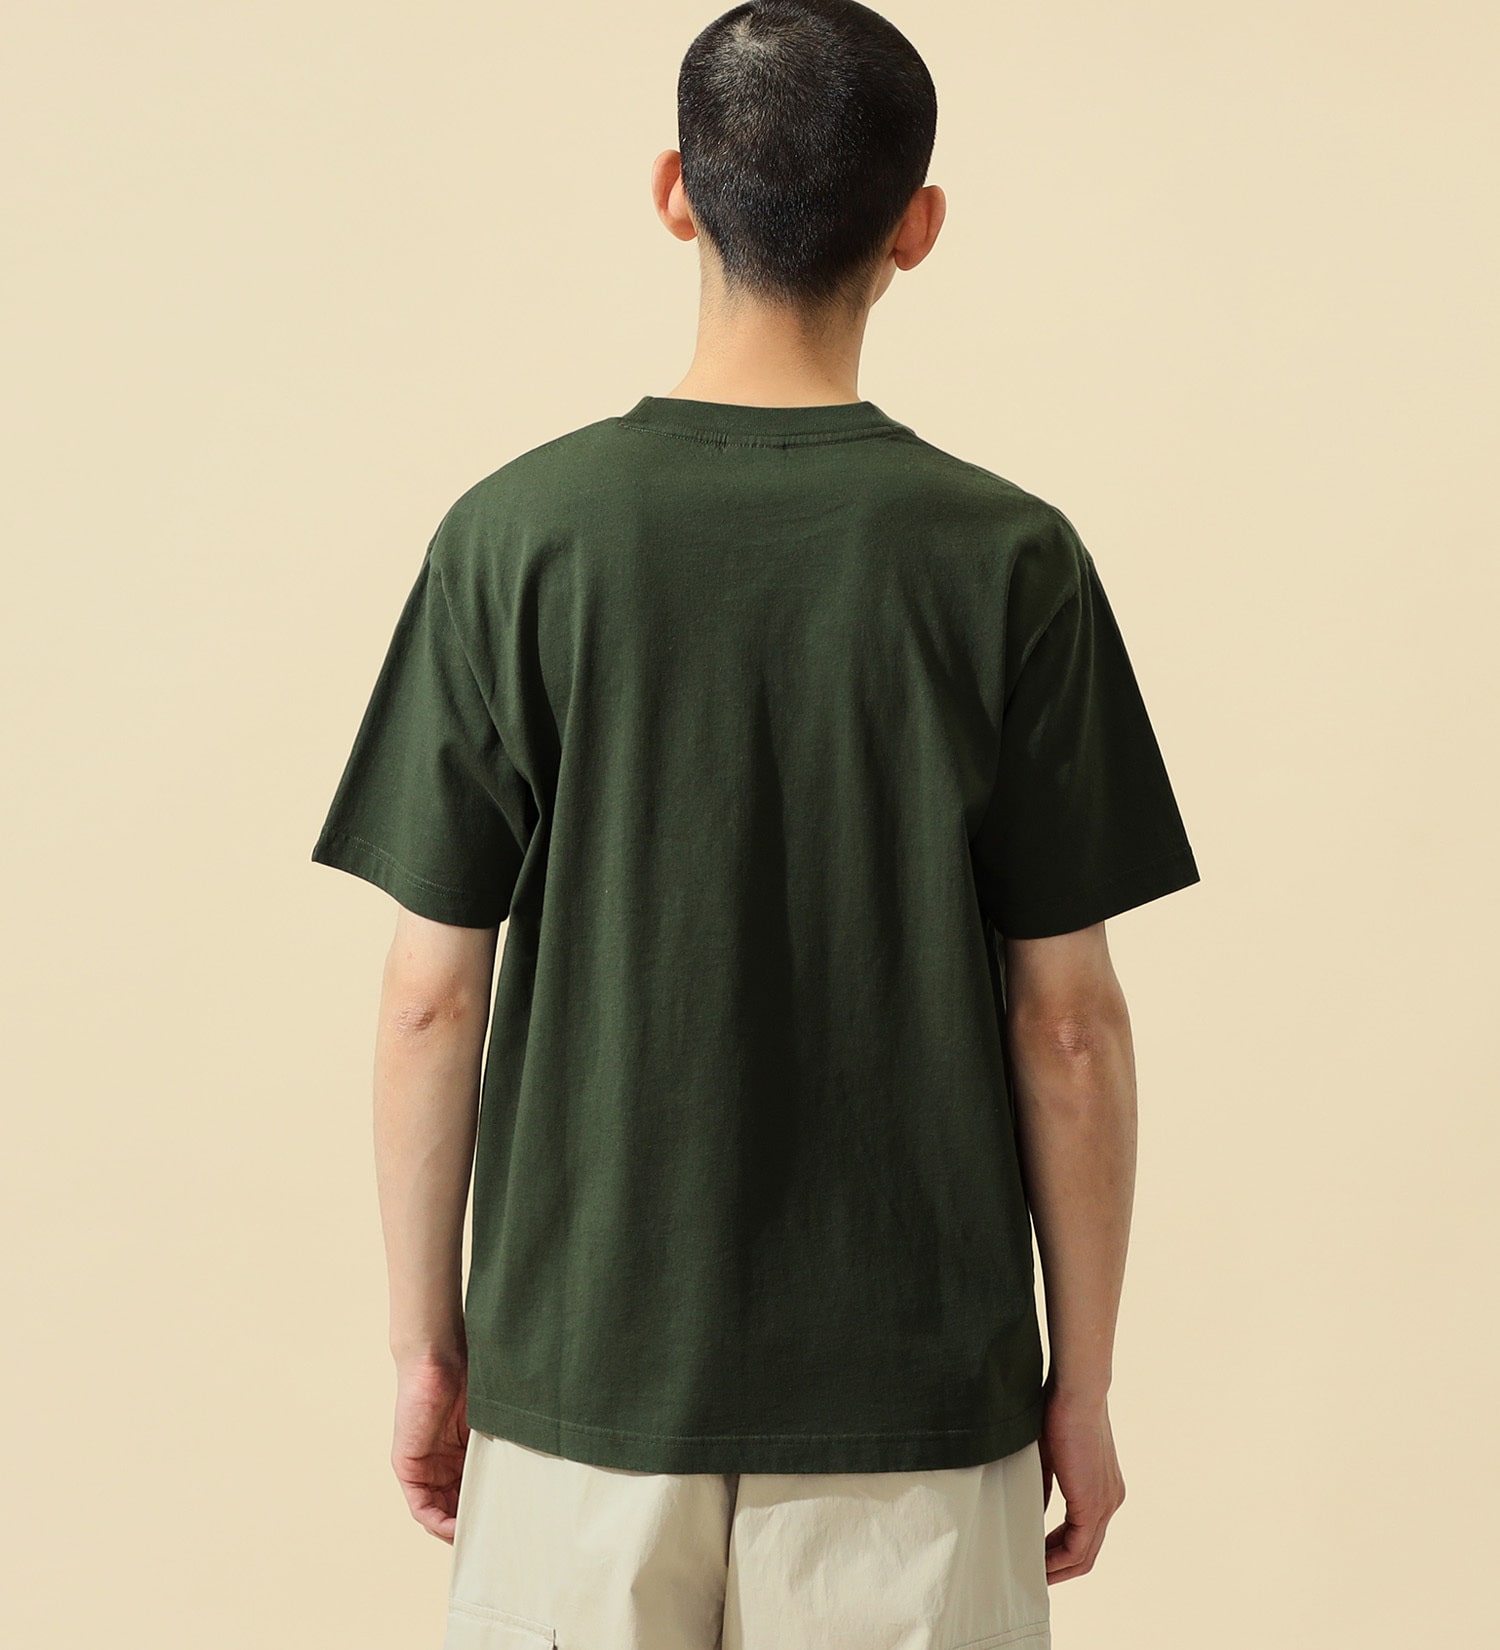 ALPHA(アルファ)のAマークロゴプリントTシャツ 半袖|トップス/Tシャツ/カットソー/メンズ|アーミー